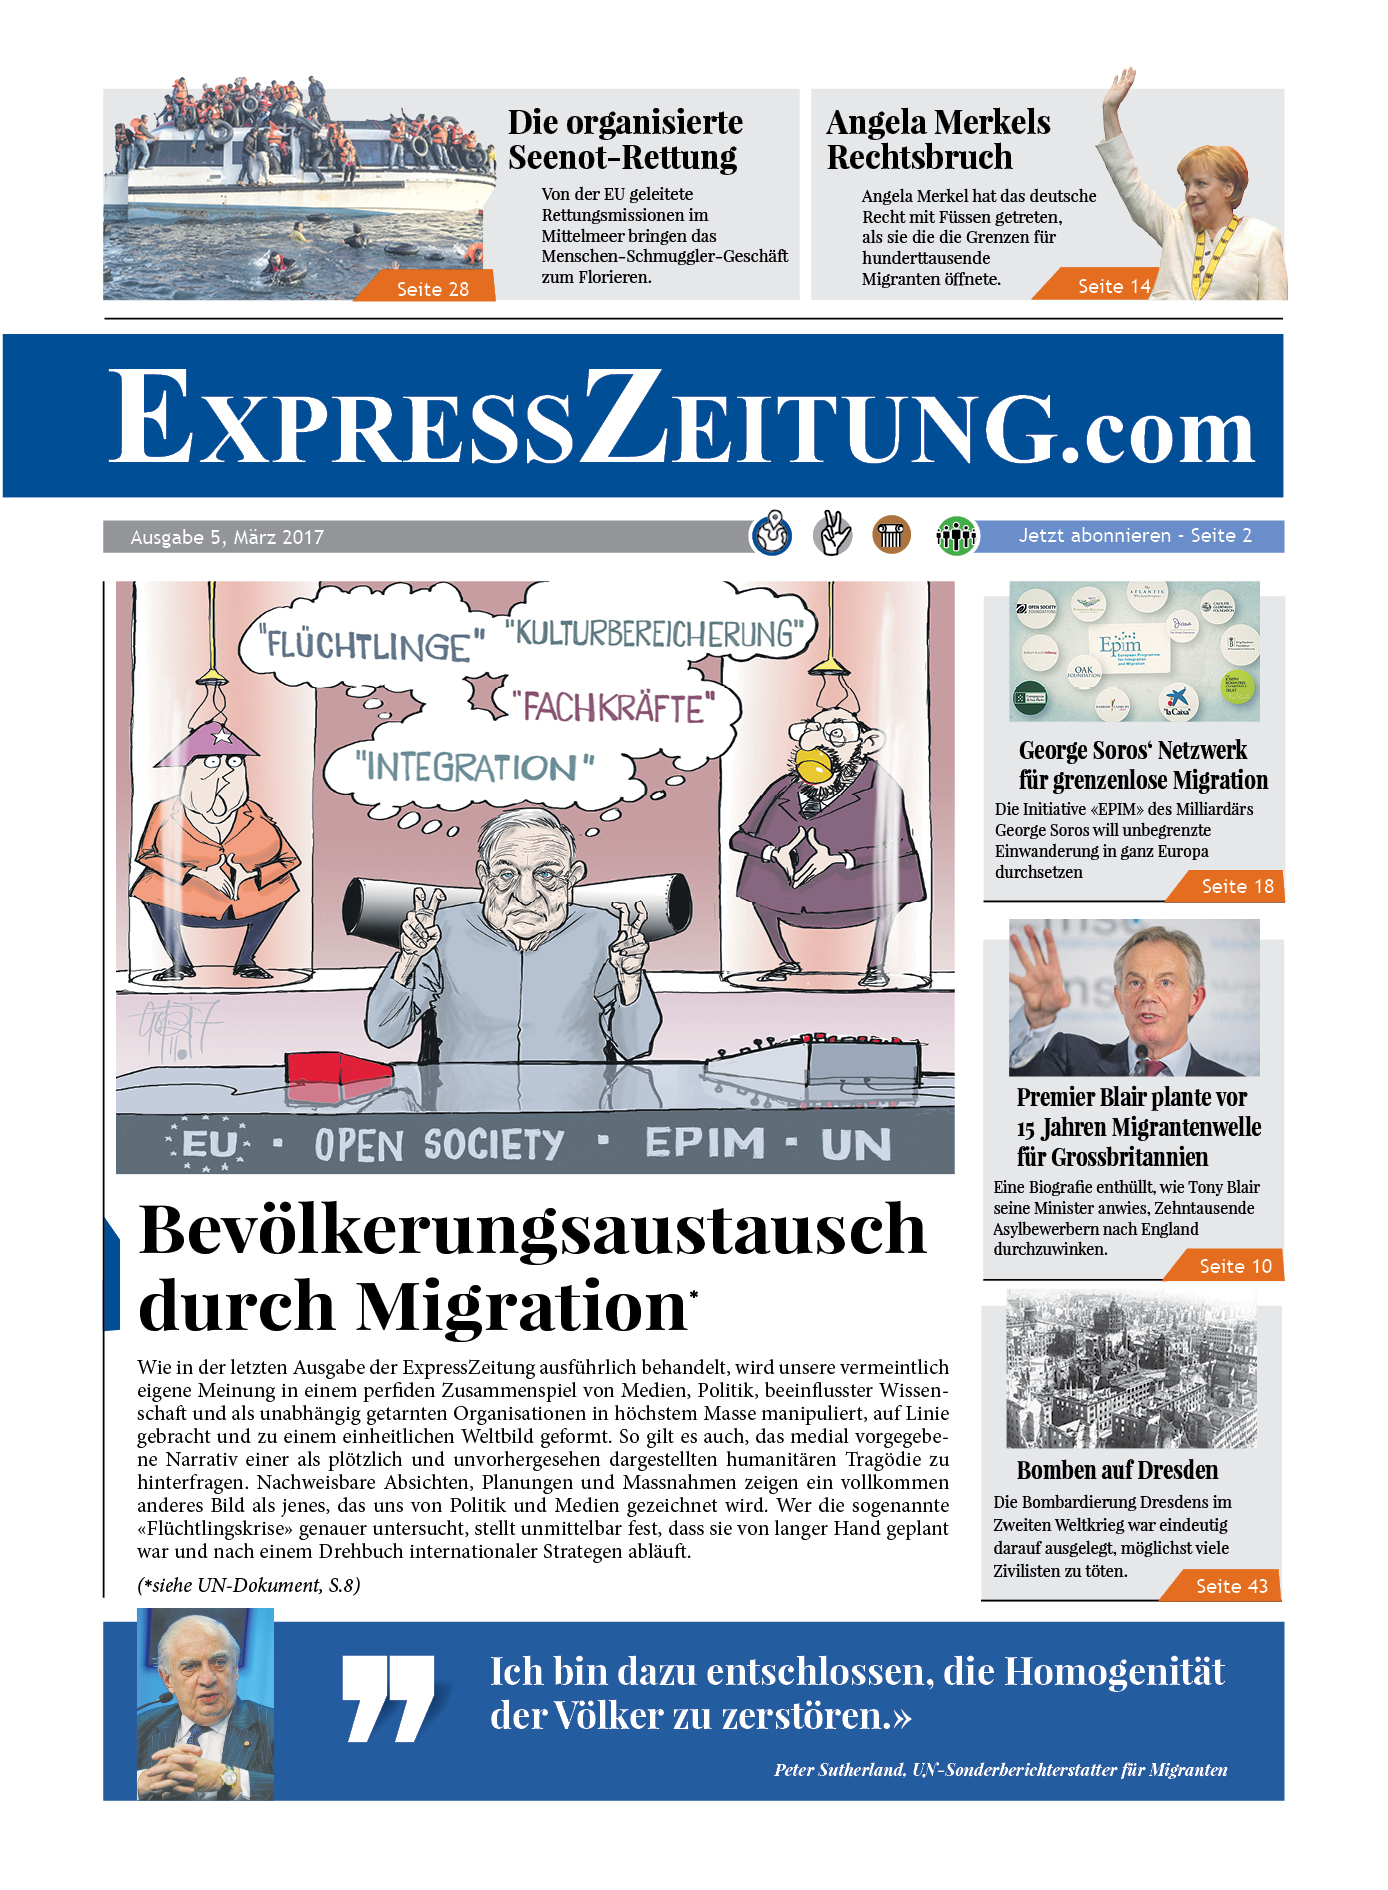 Ausgabe 05: Bevölkerungsaustausch durch Migration